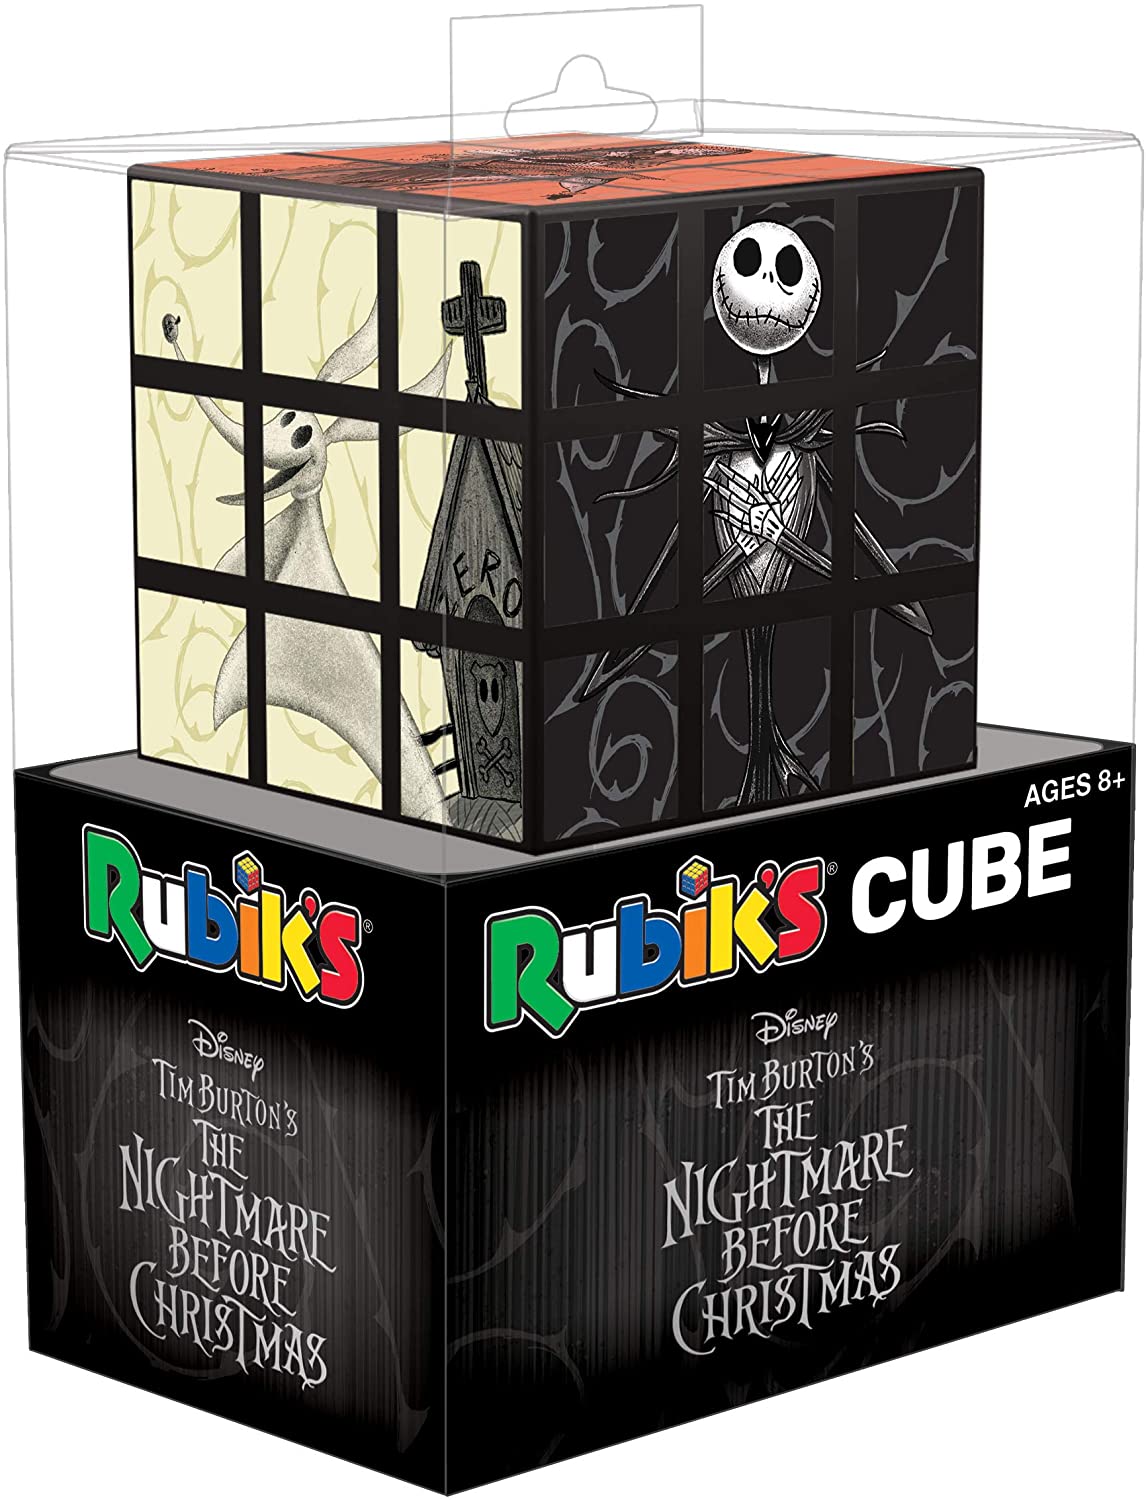 Rubik's Cube: The Nightmare Before Christmas